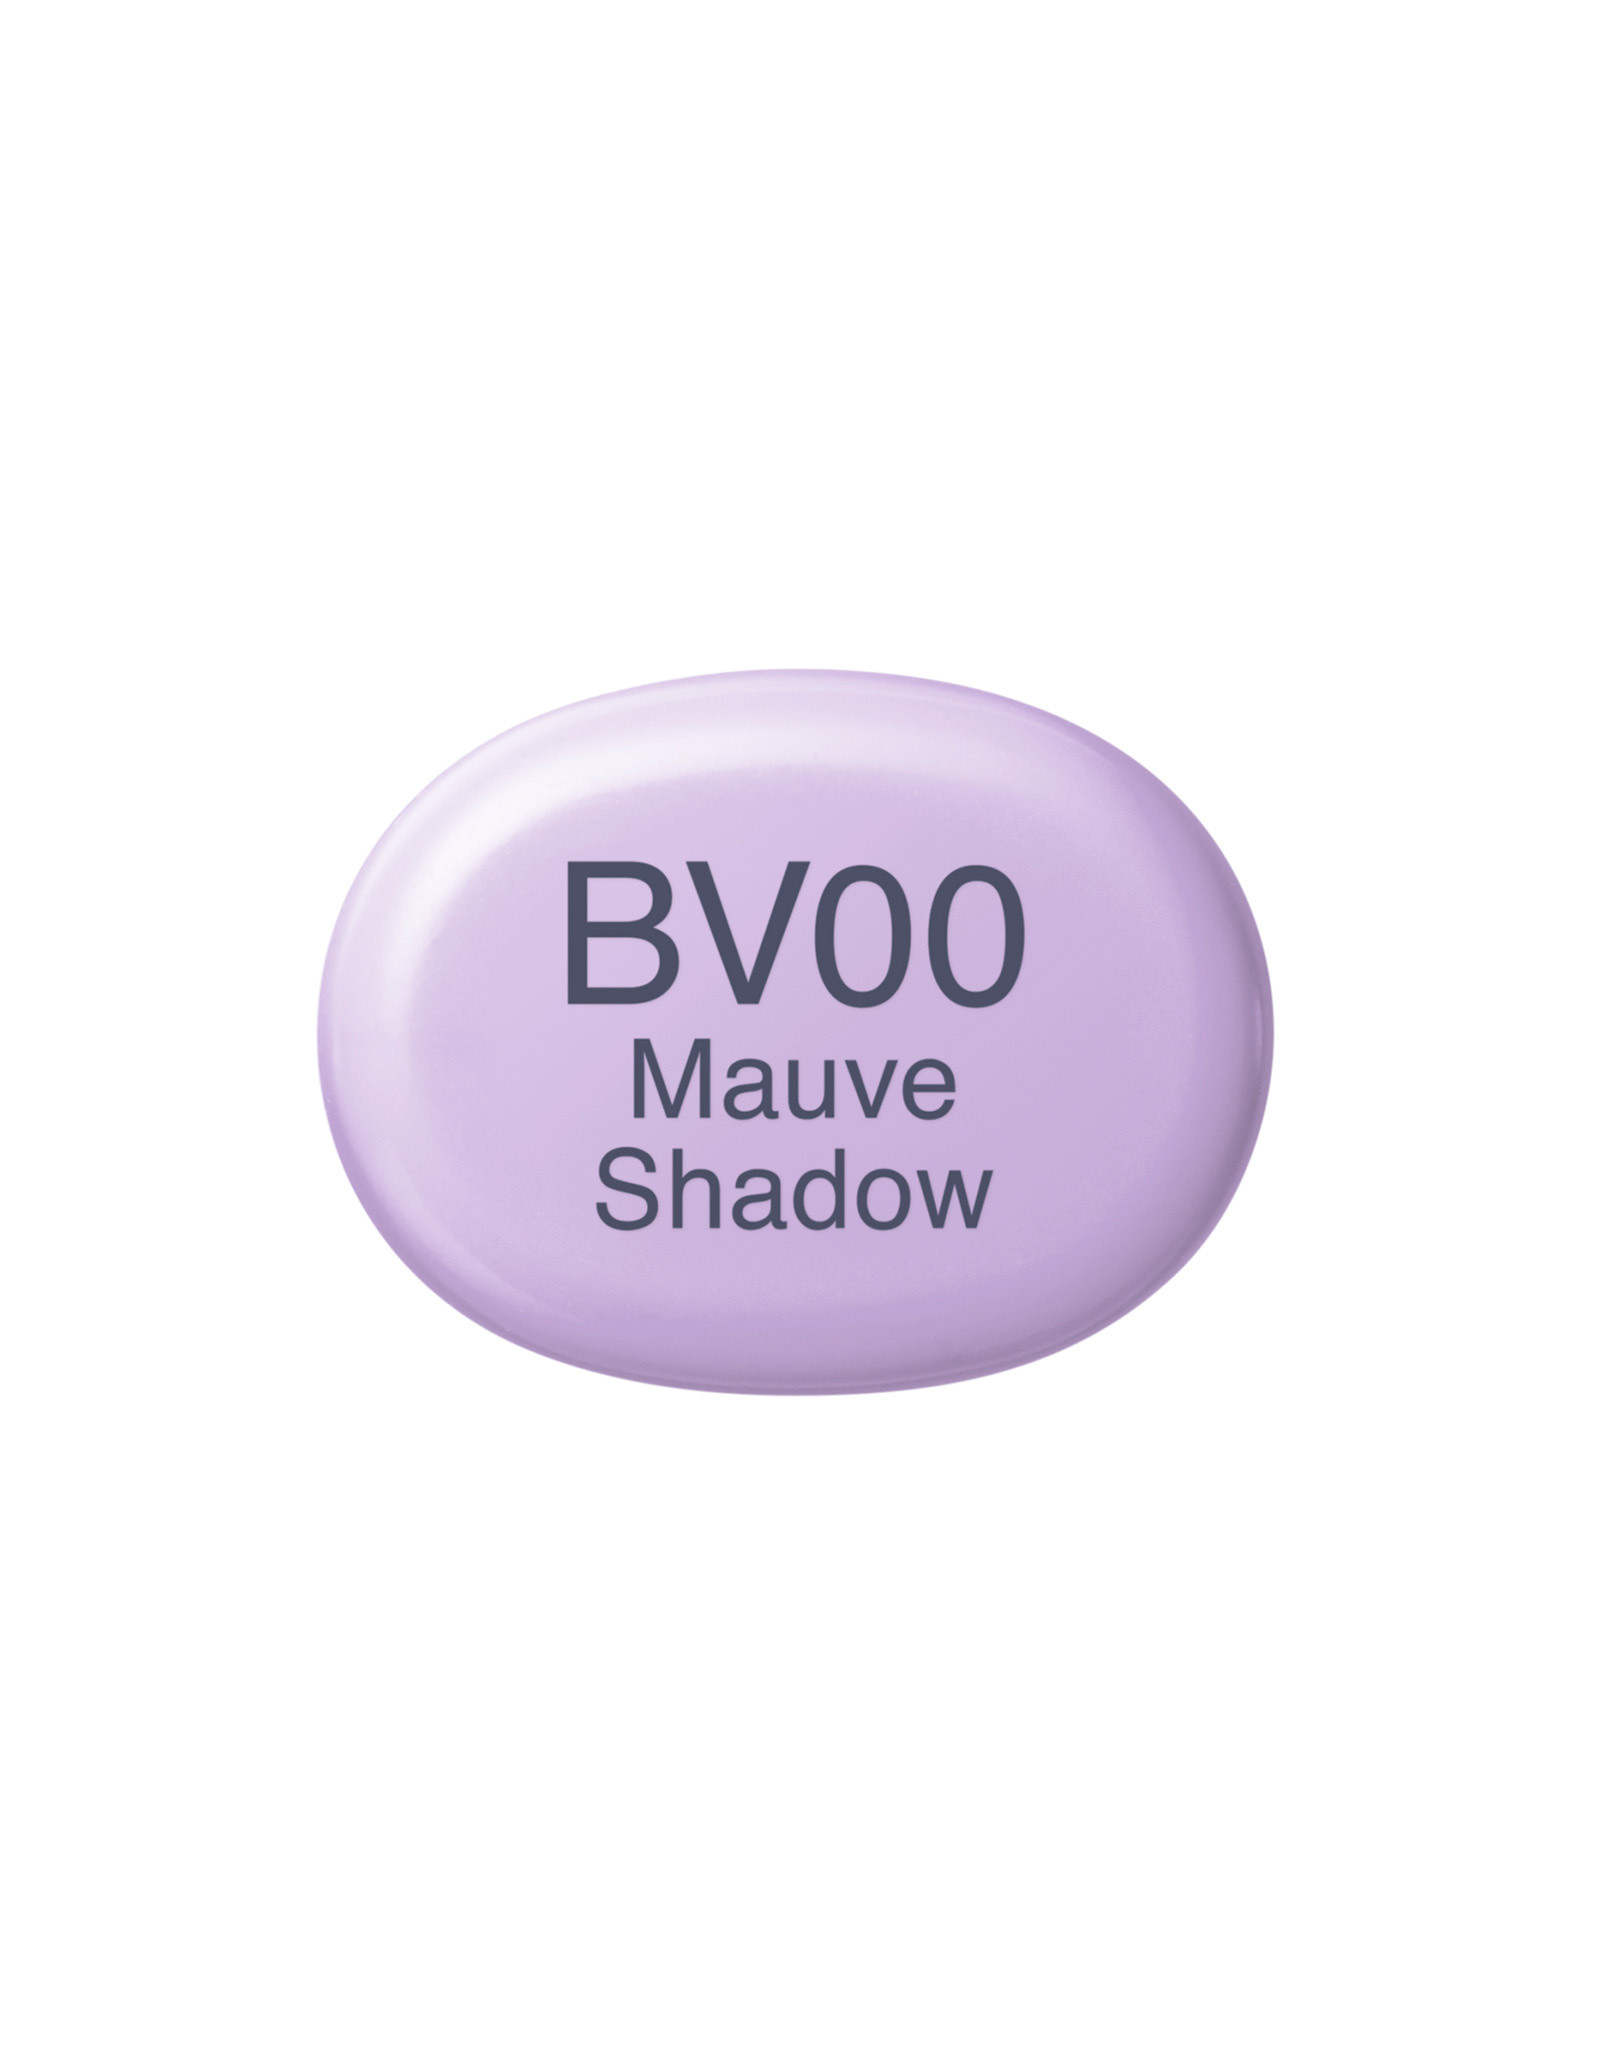 COPIC COPIC Sketch Marker BV00 Mauve Shadow